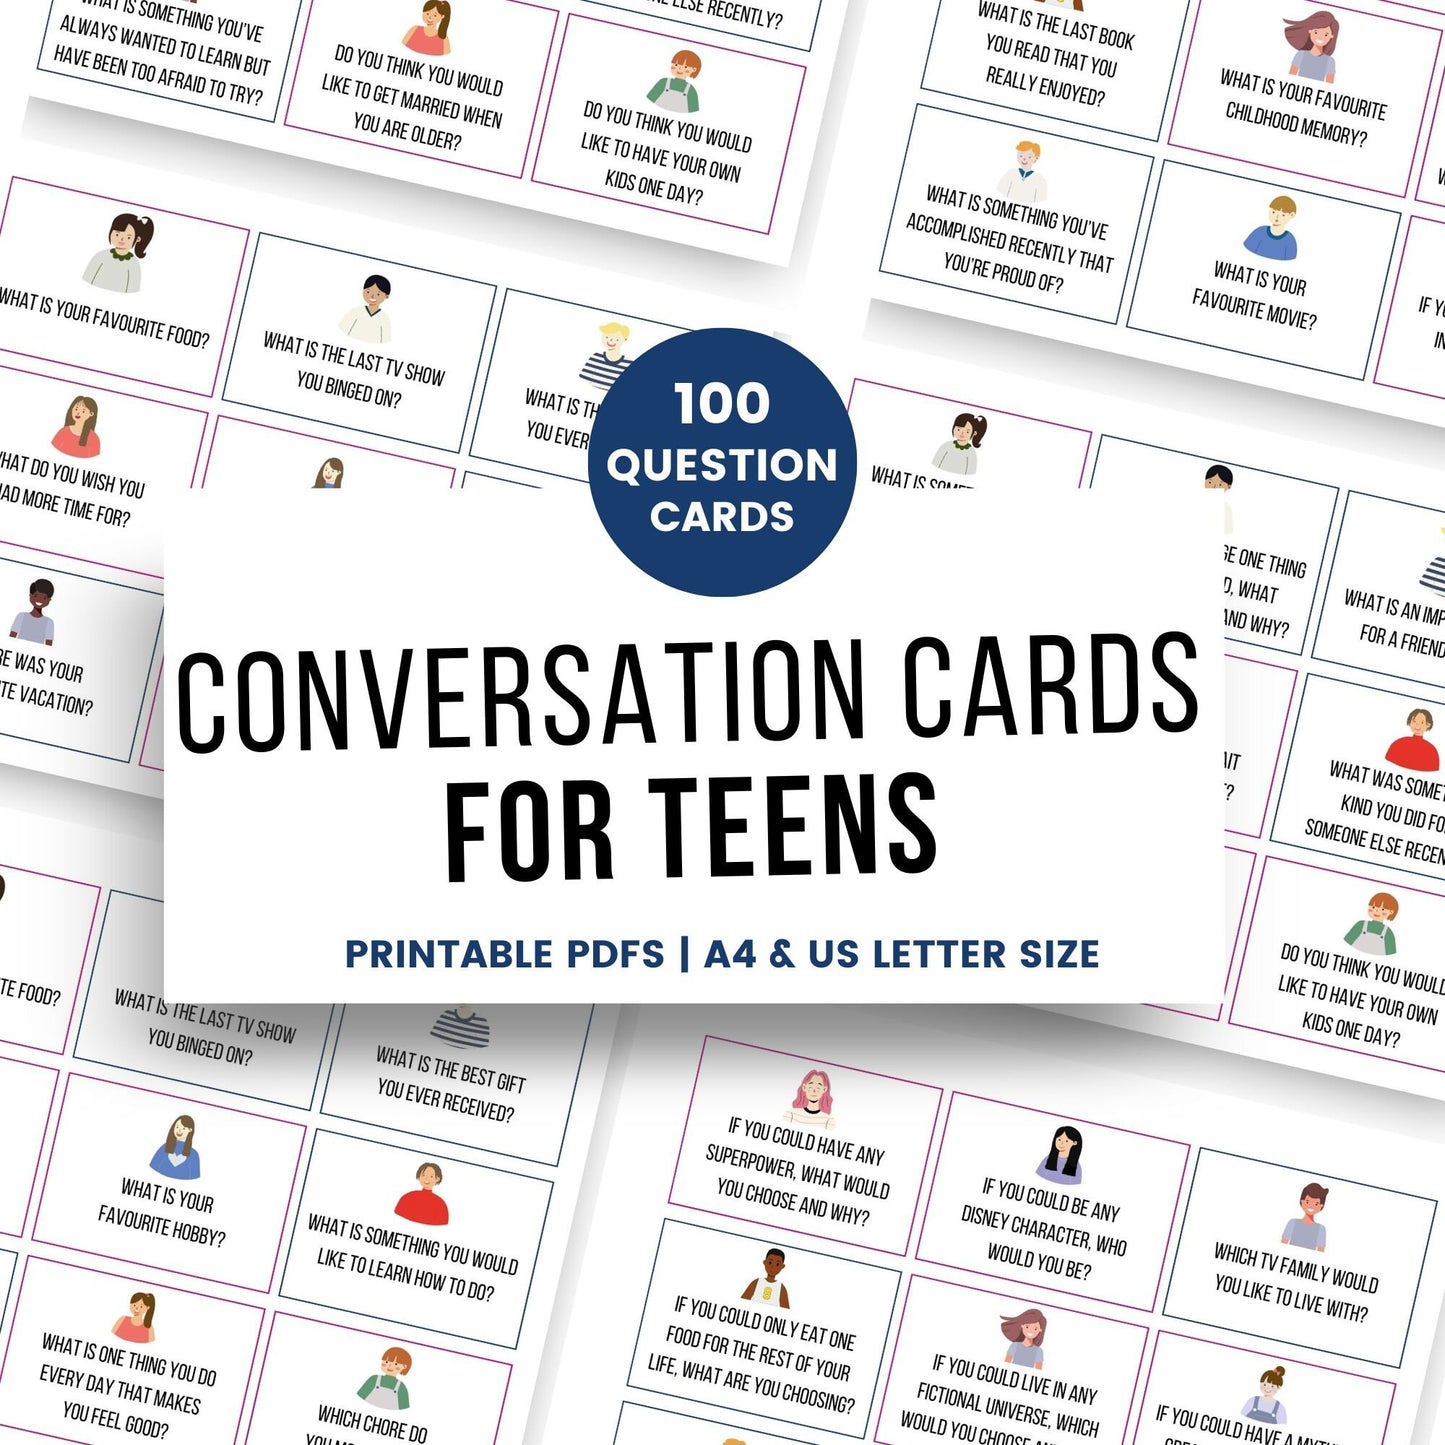 Teen Conversation Cards - Simplify Create Inspire